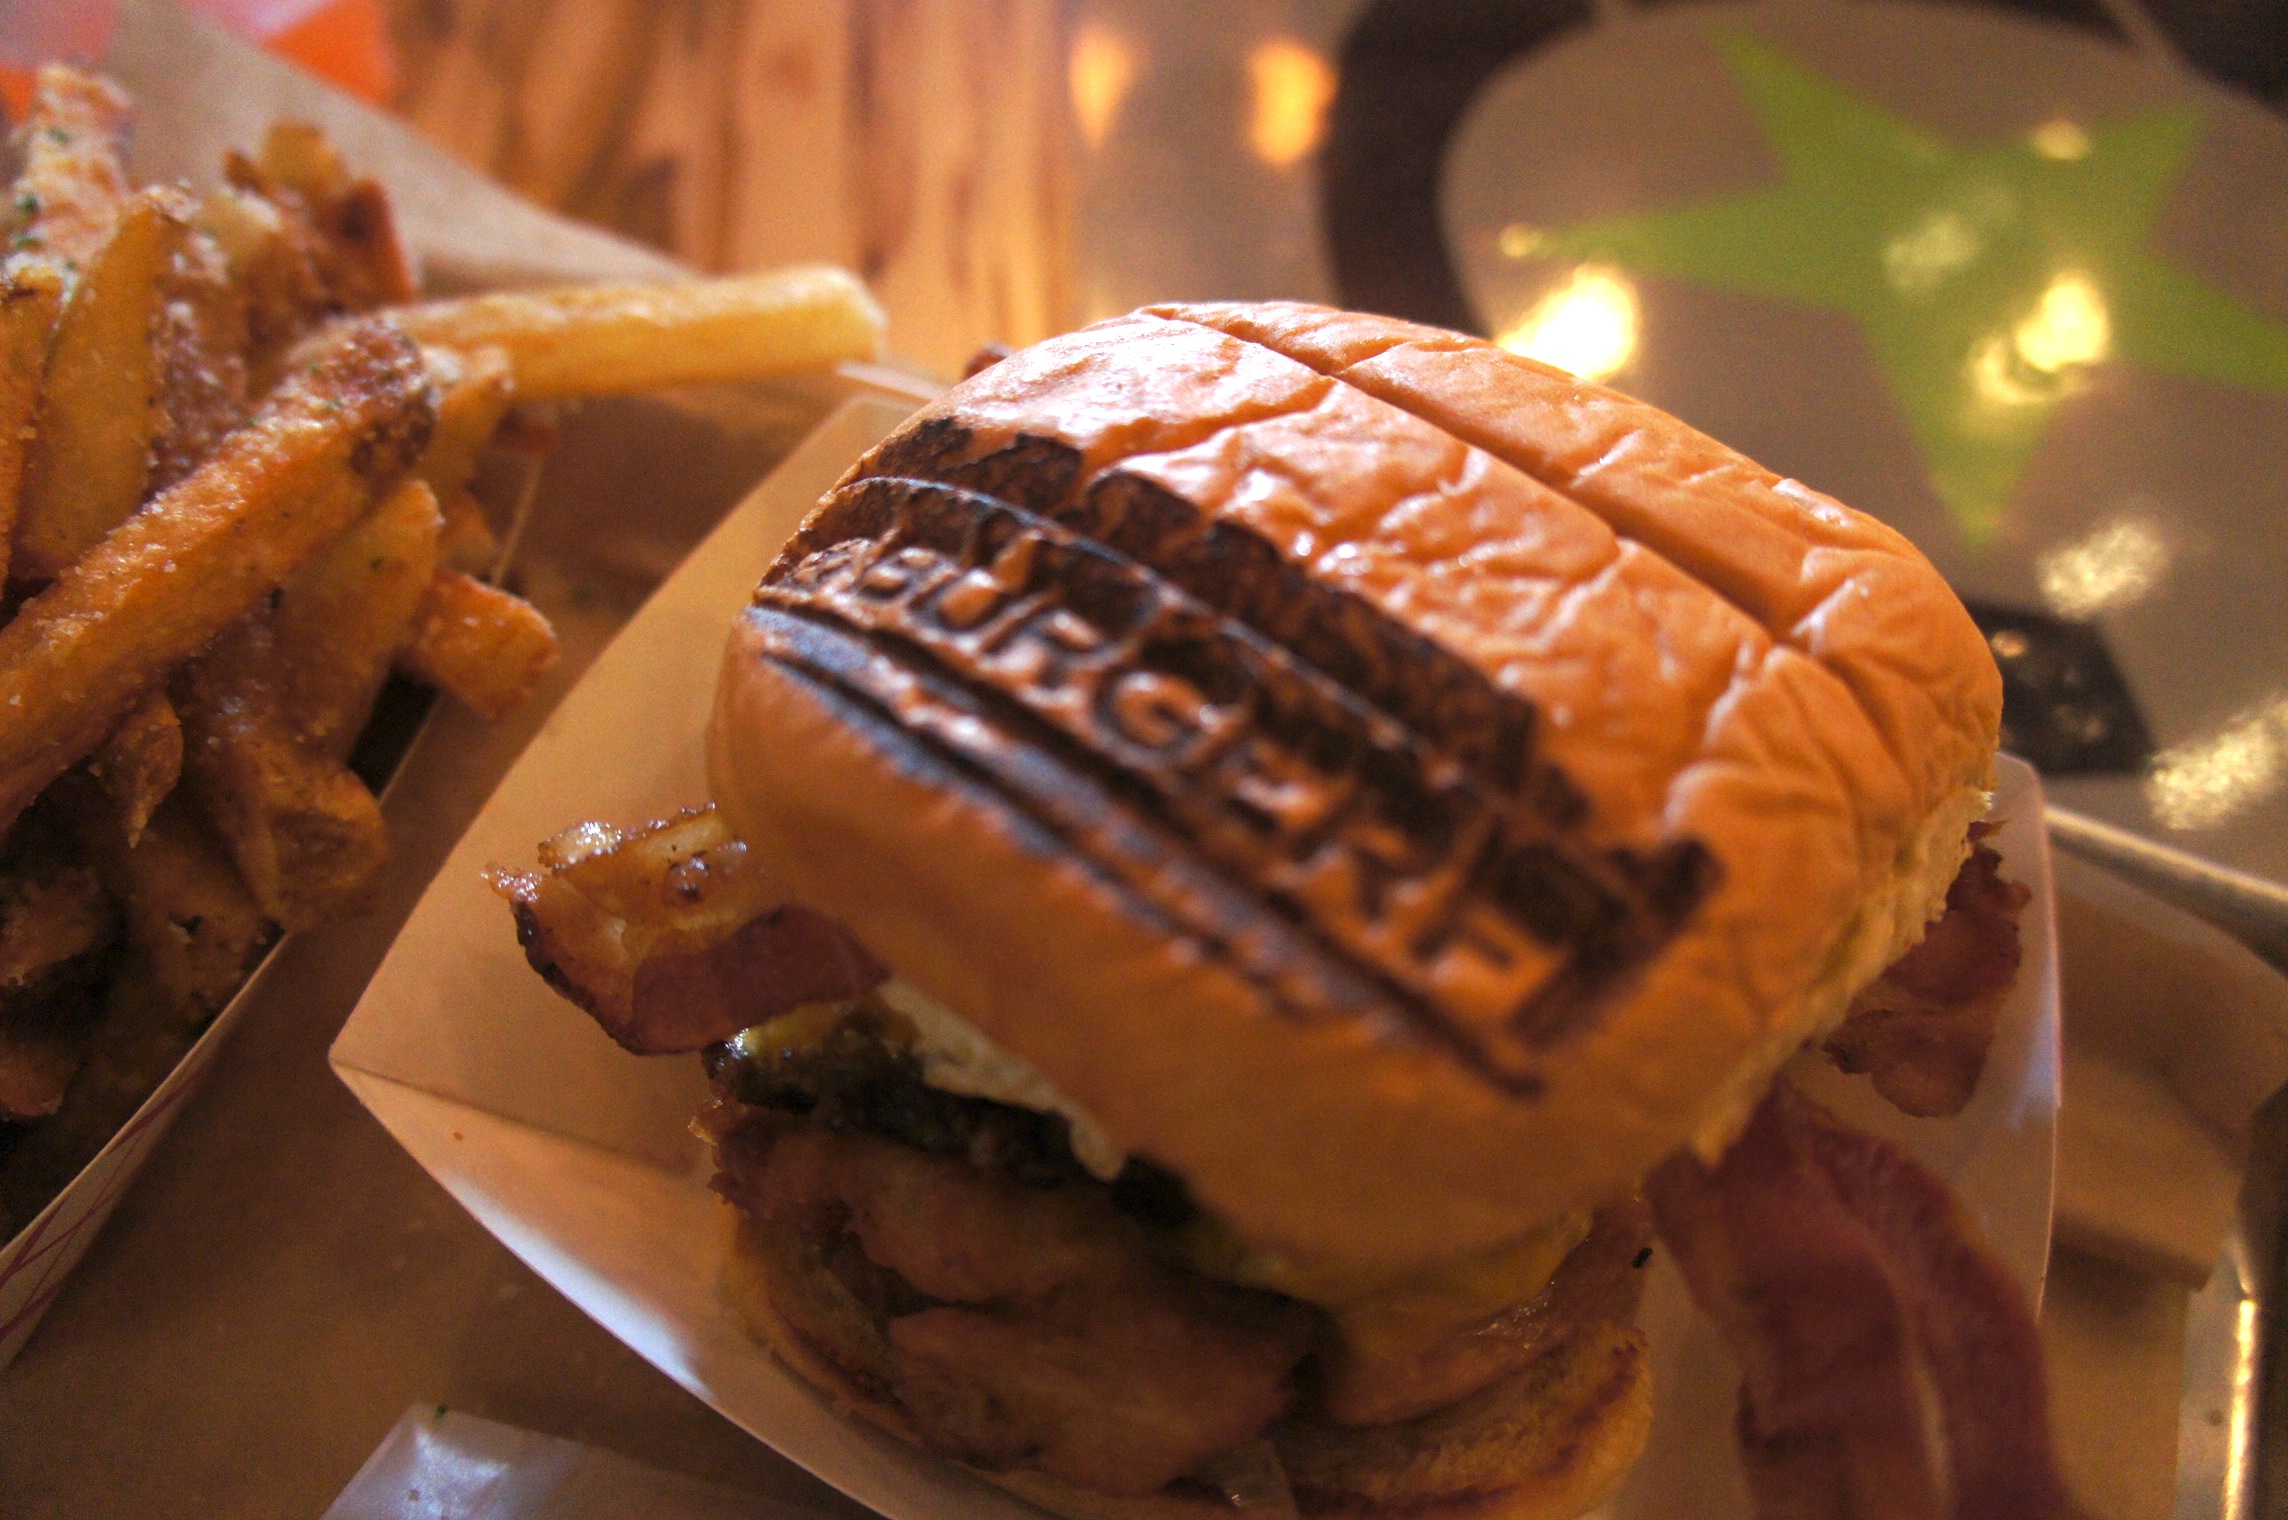 BurgerFi – the burger trend has arrived….